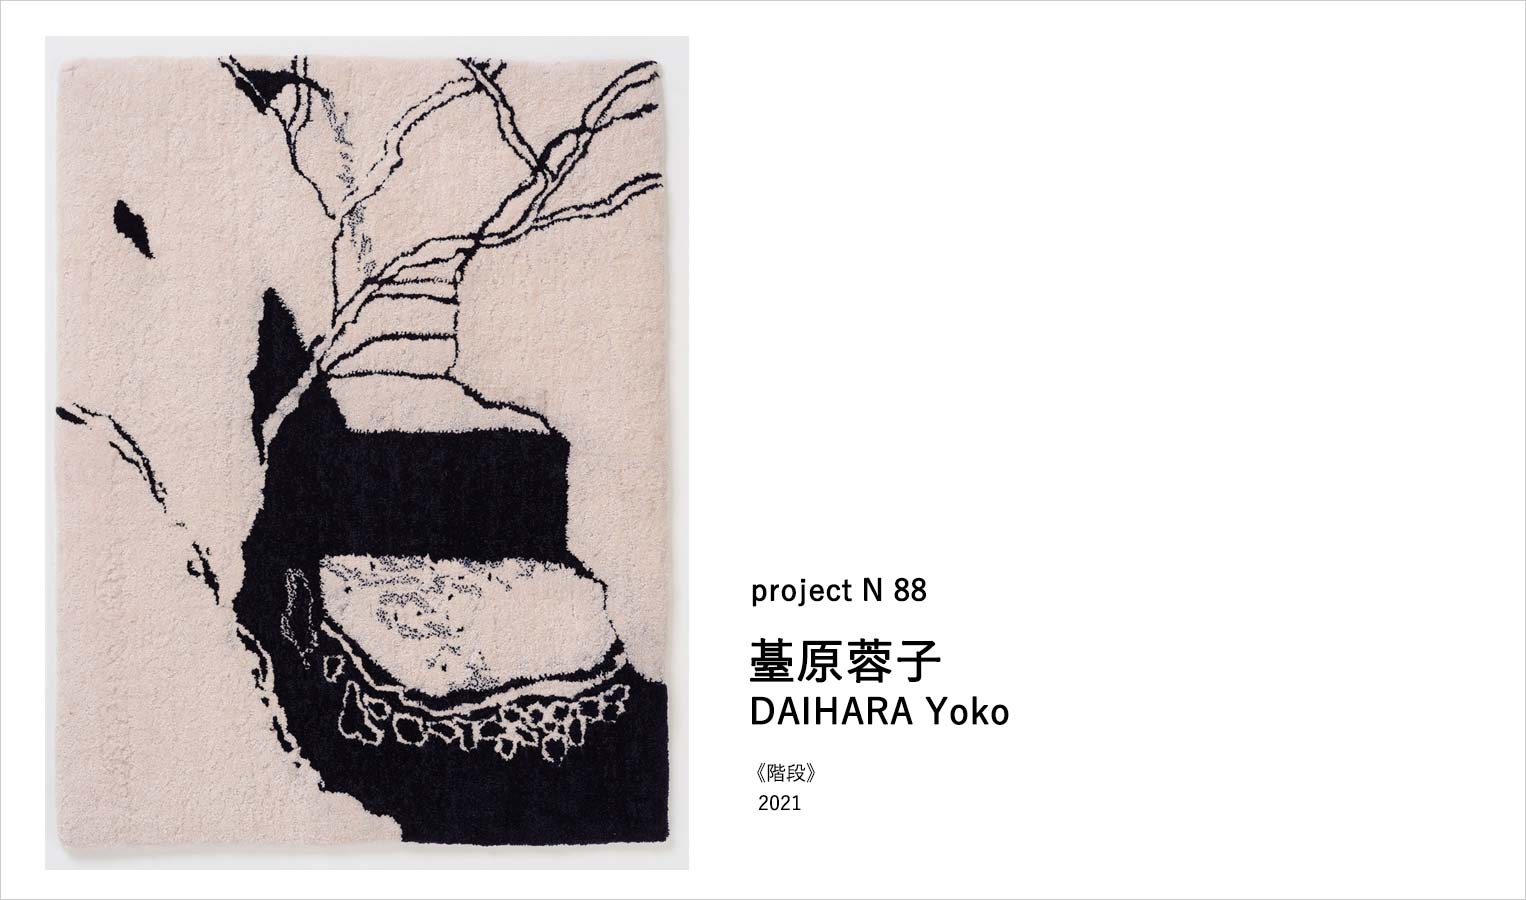 project N 88 DAIHARA Yoko